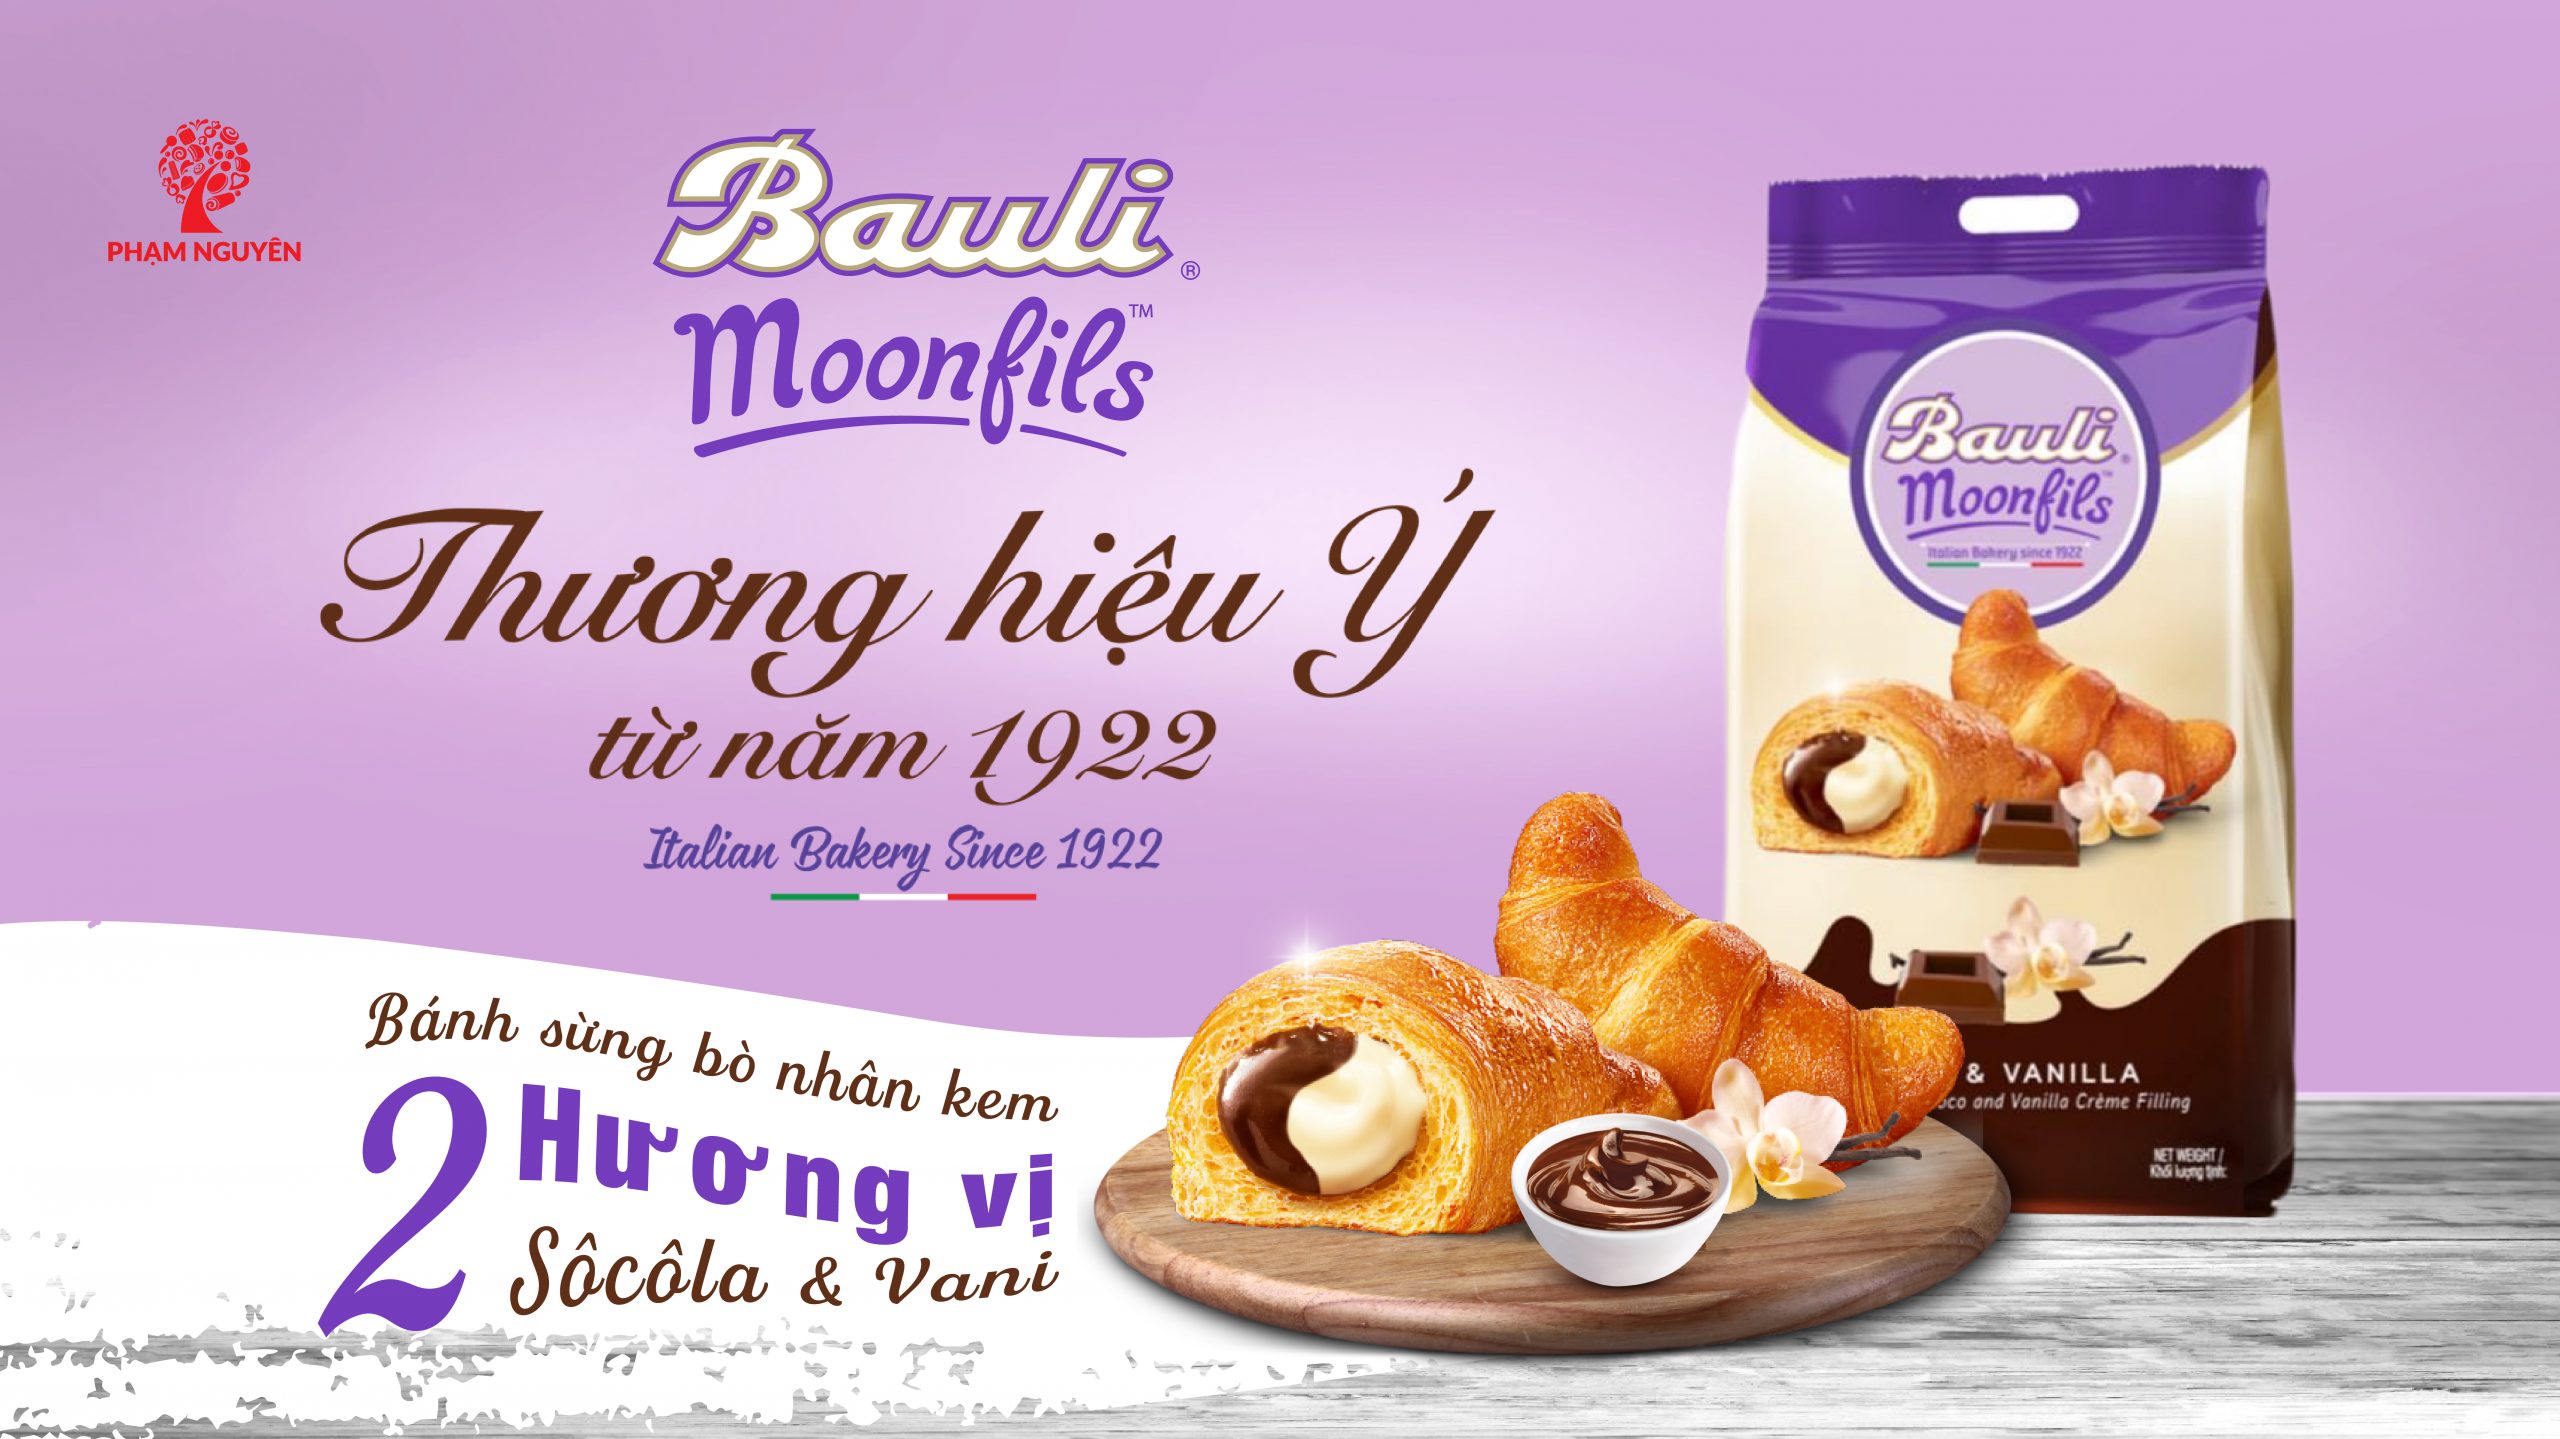 Bauli Moonfils - Phạm Nguyên Foods